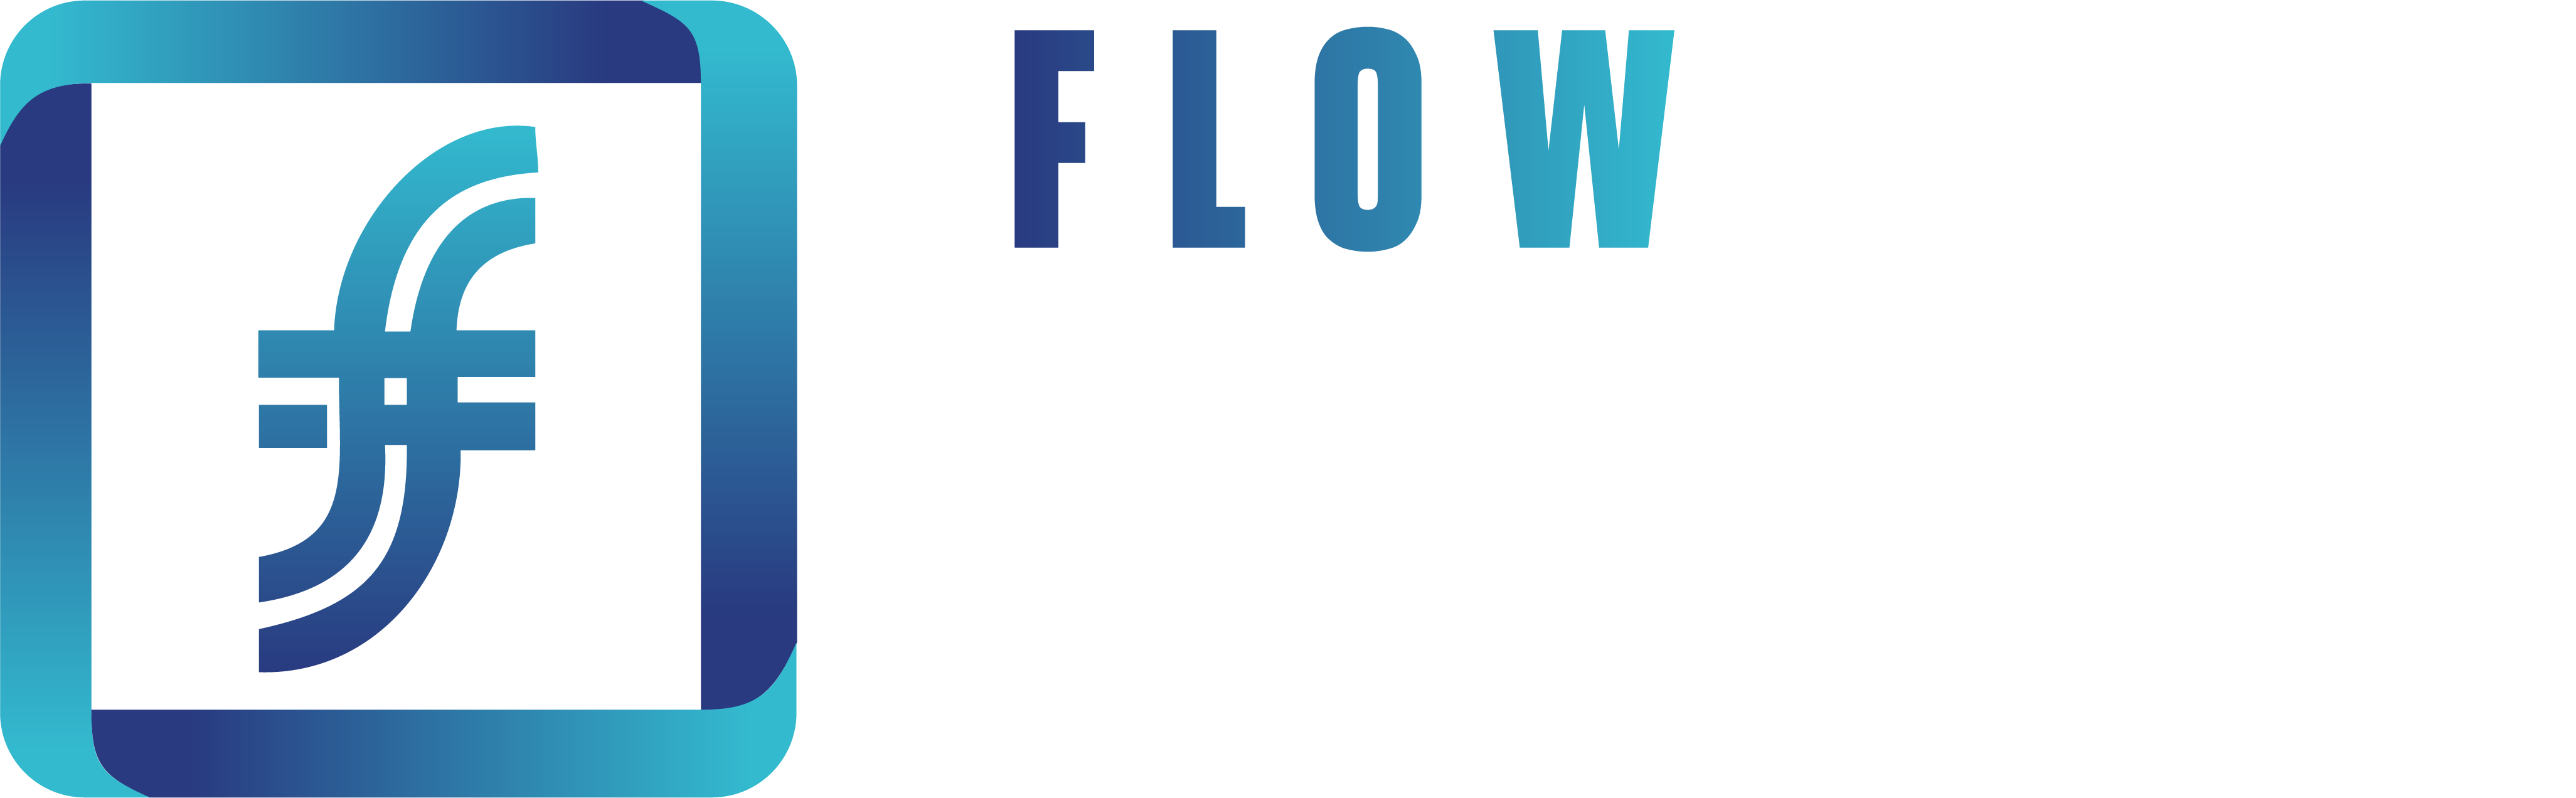 Flow Factory